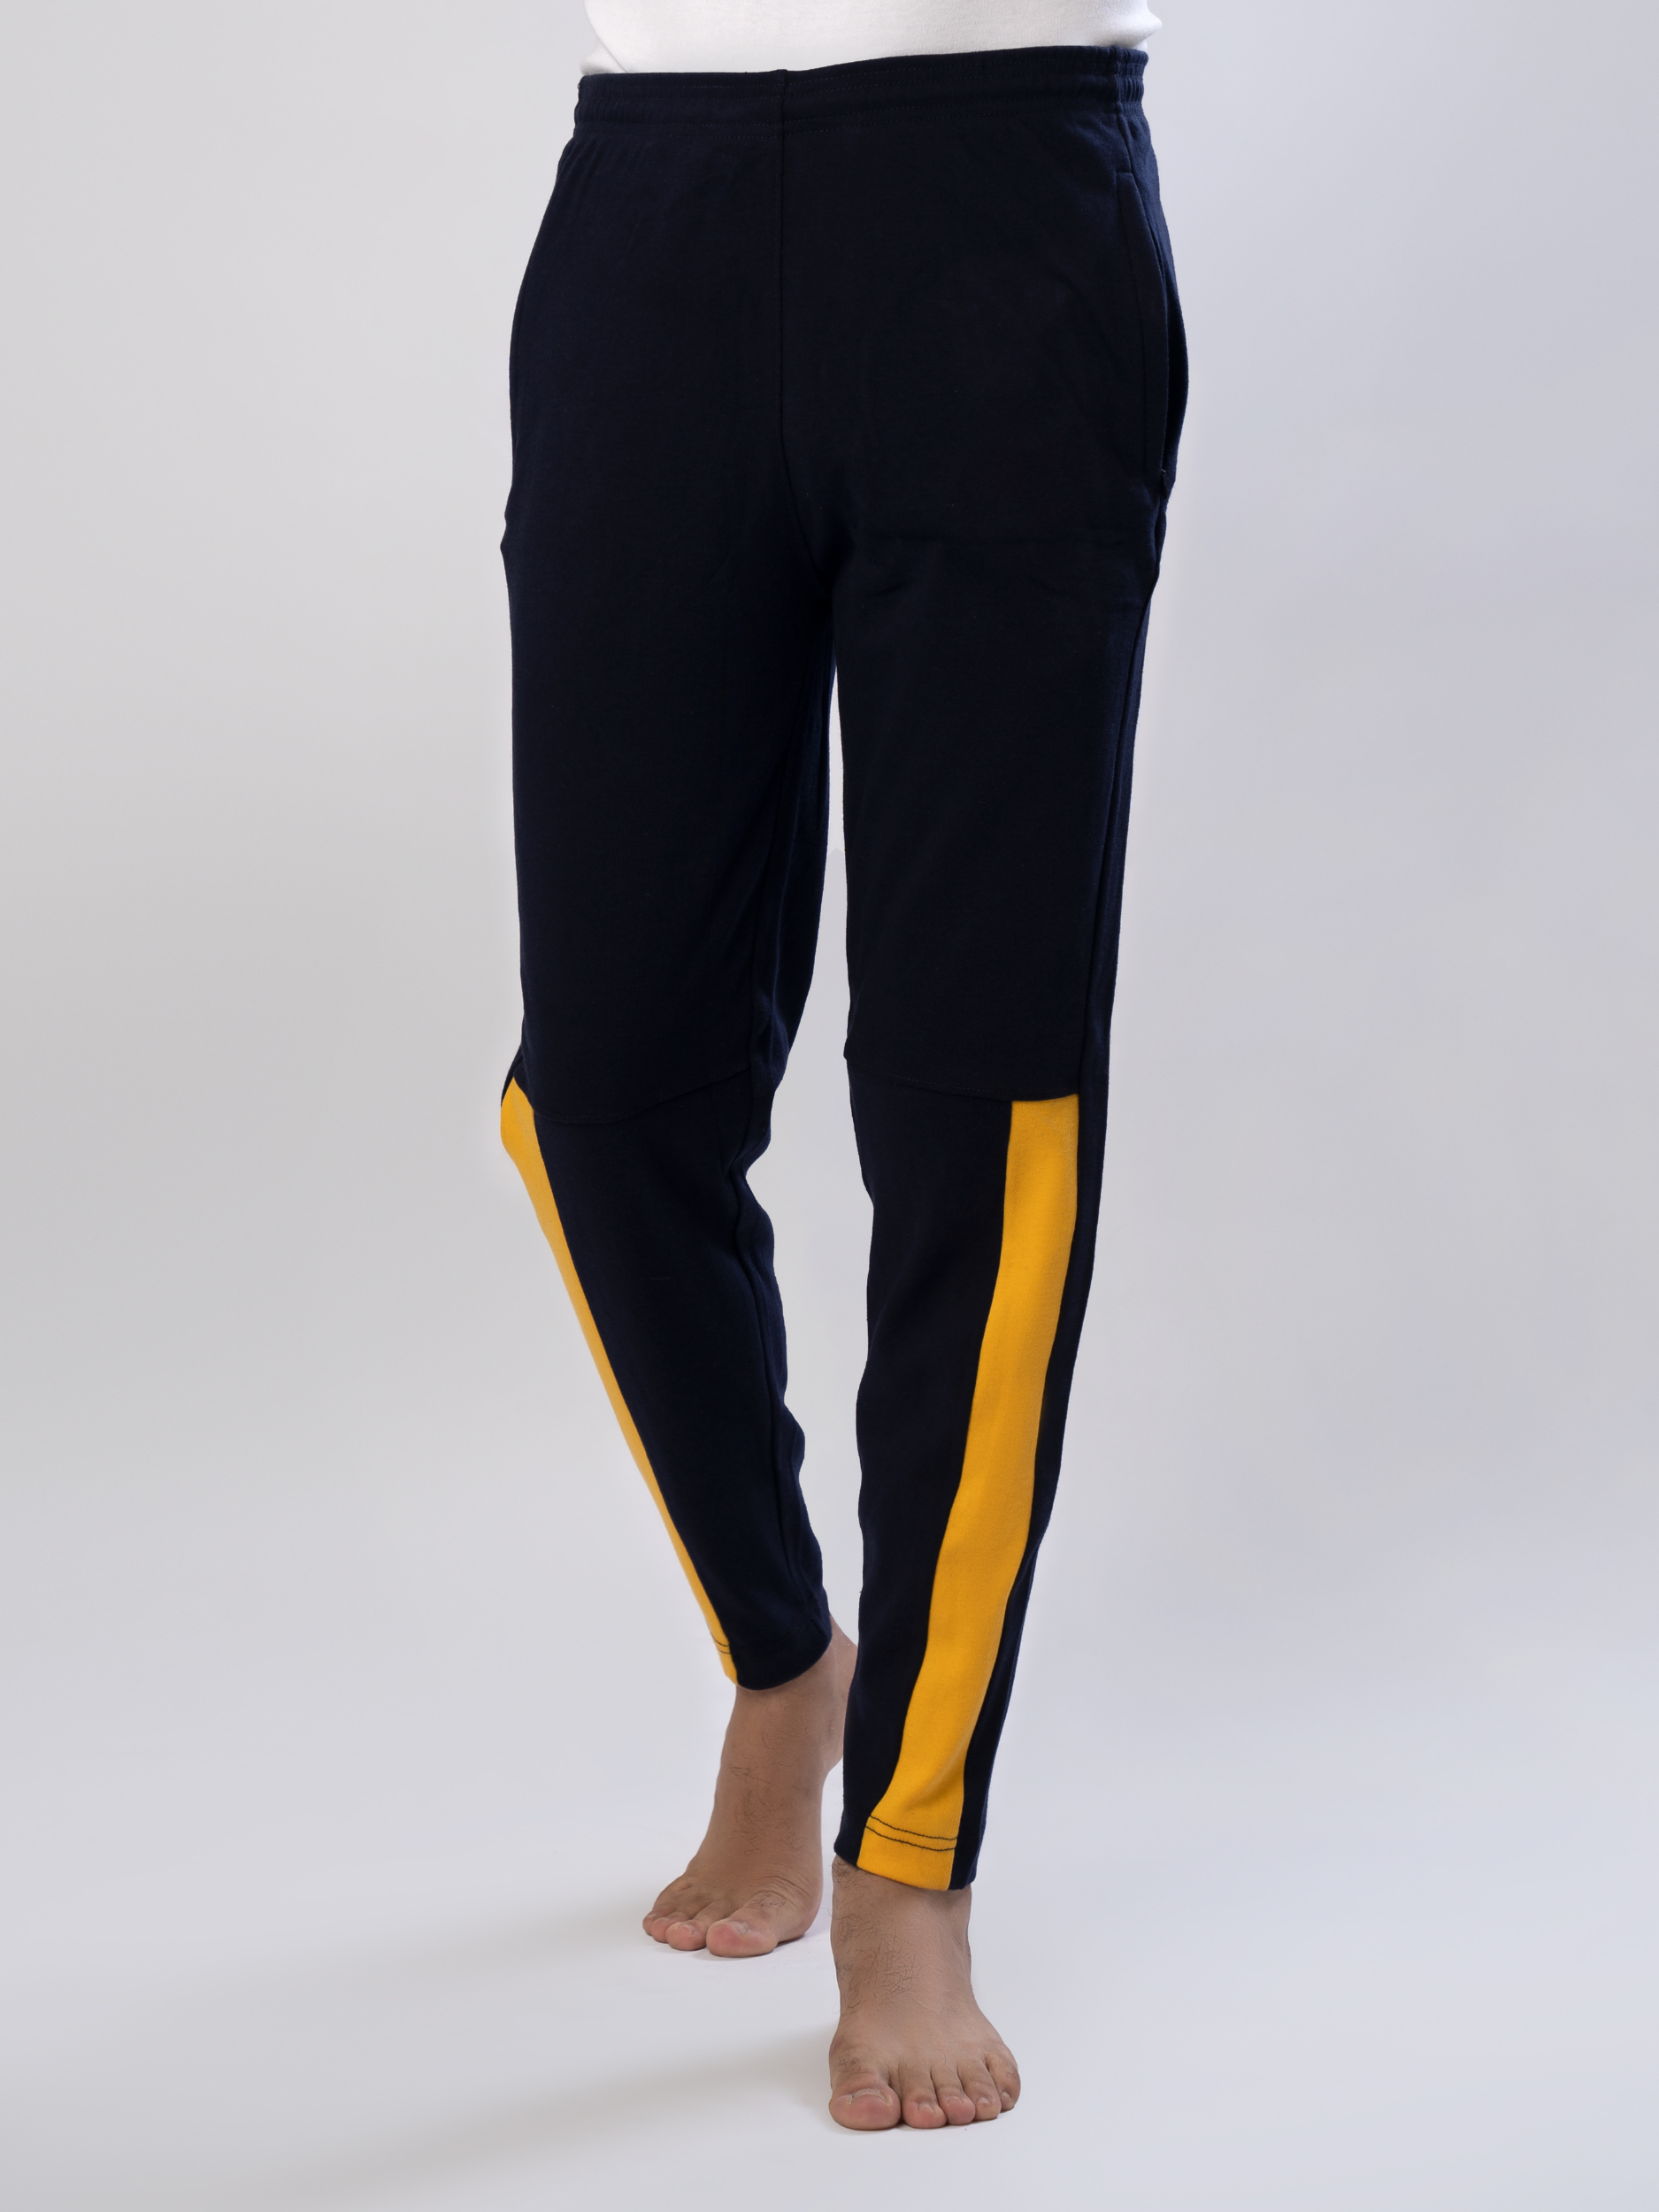 Max Zipper Premium Fitted Trouser (Navy) - Hinz Knit